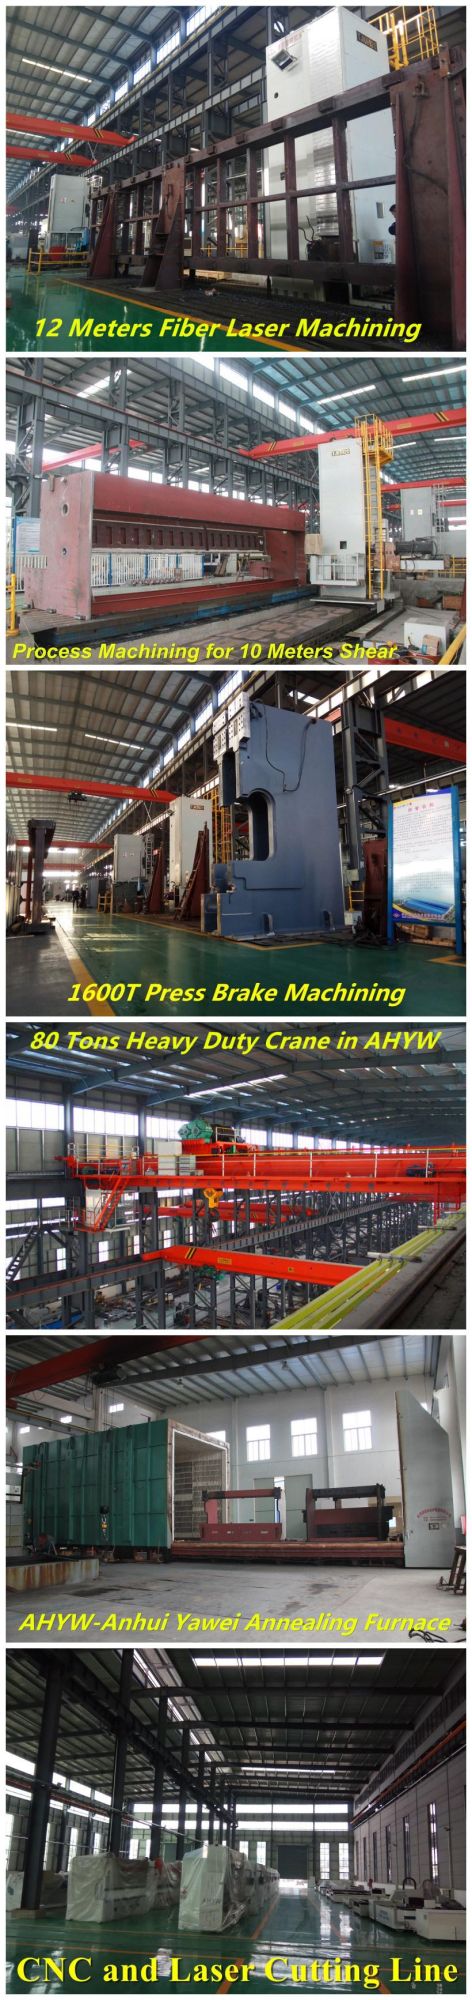 Robotic Press Brake From Anhui Yawei with Ahyw Logo for Metal Sheet Bending